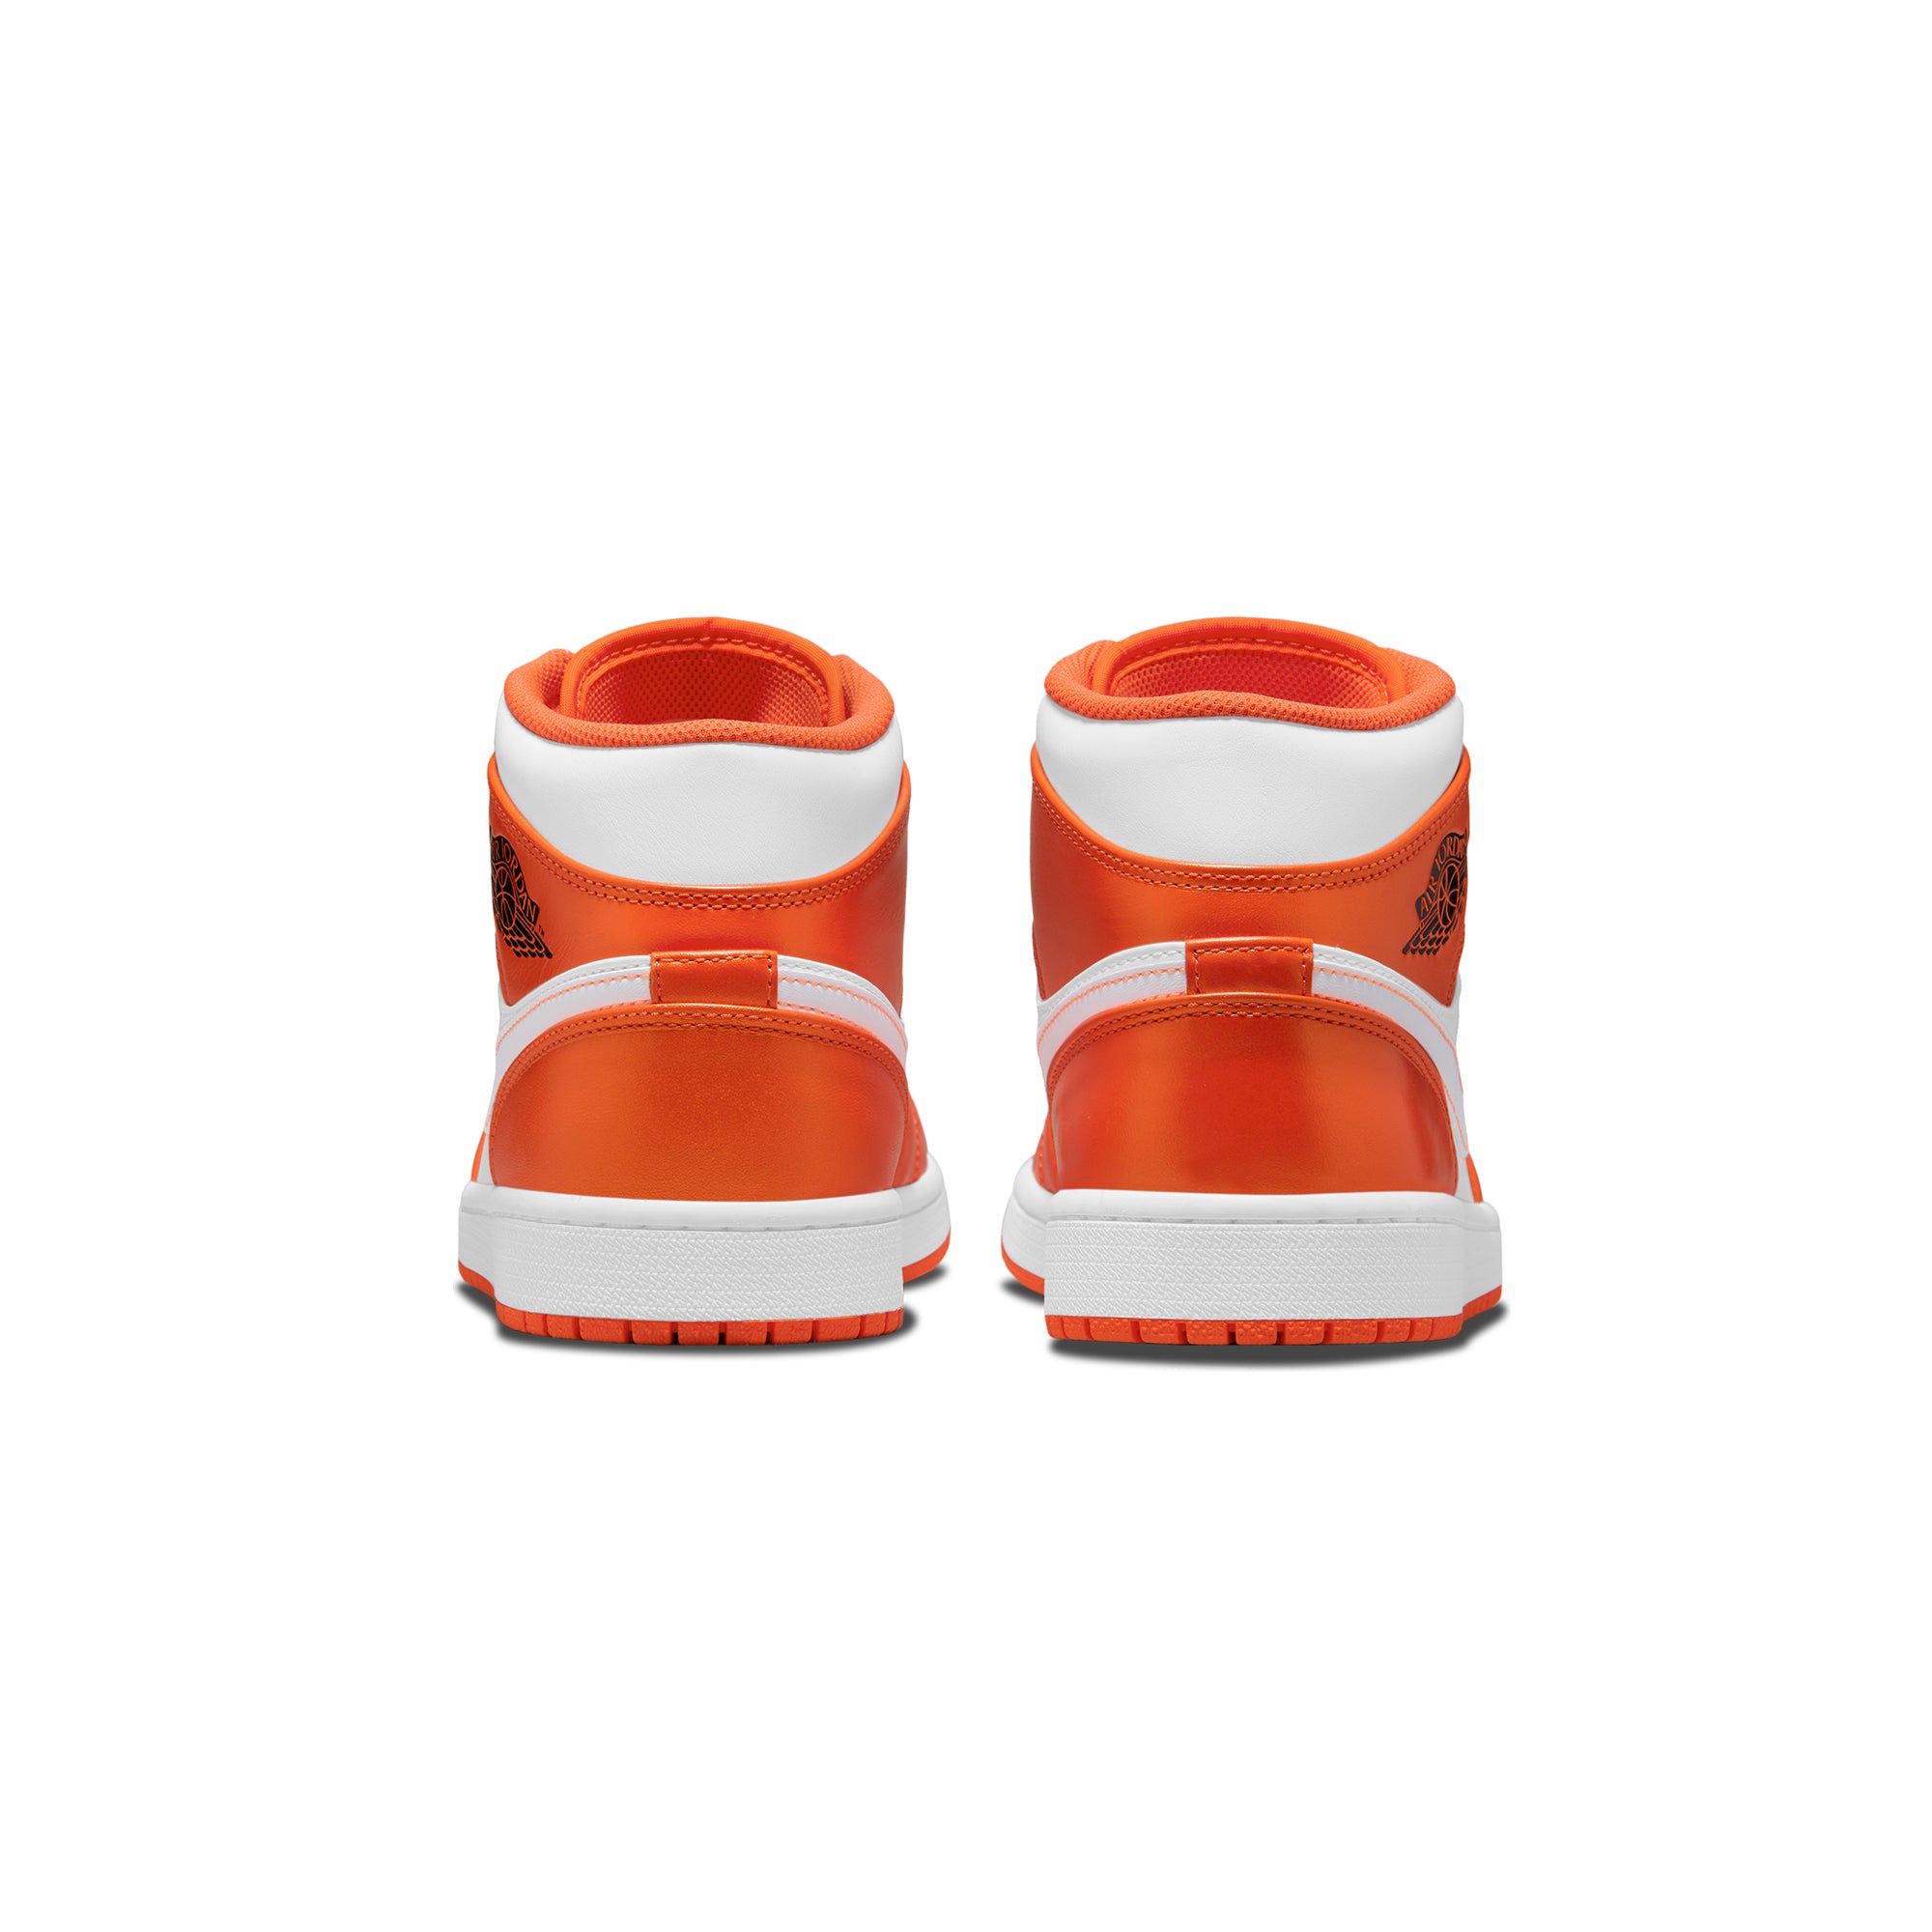 Buy Nike Men's AIR Jordan 1 MID SE Electro Orange/Black-White